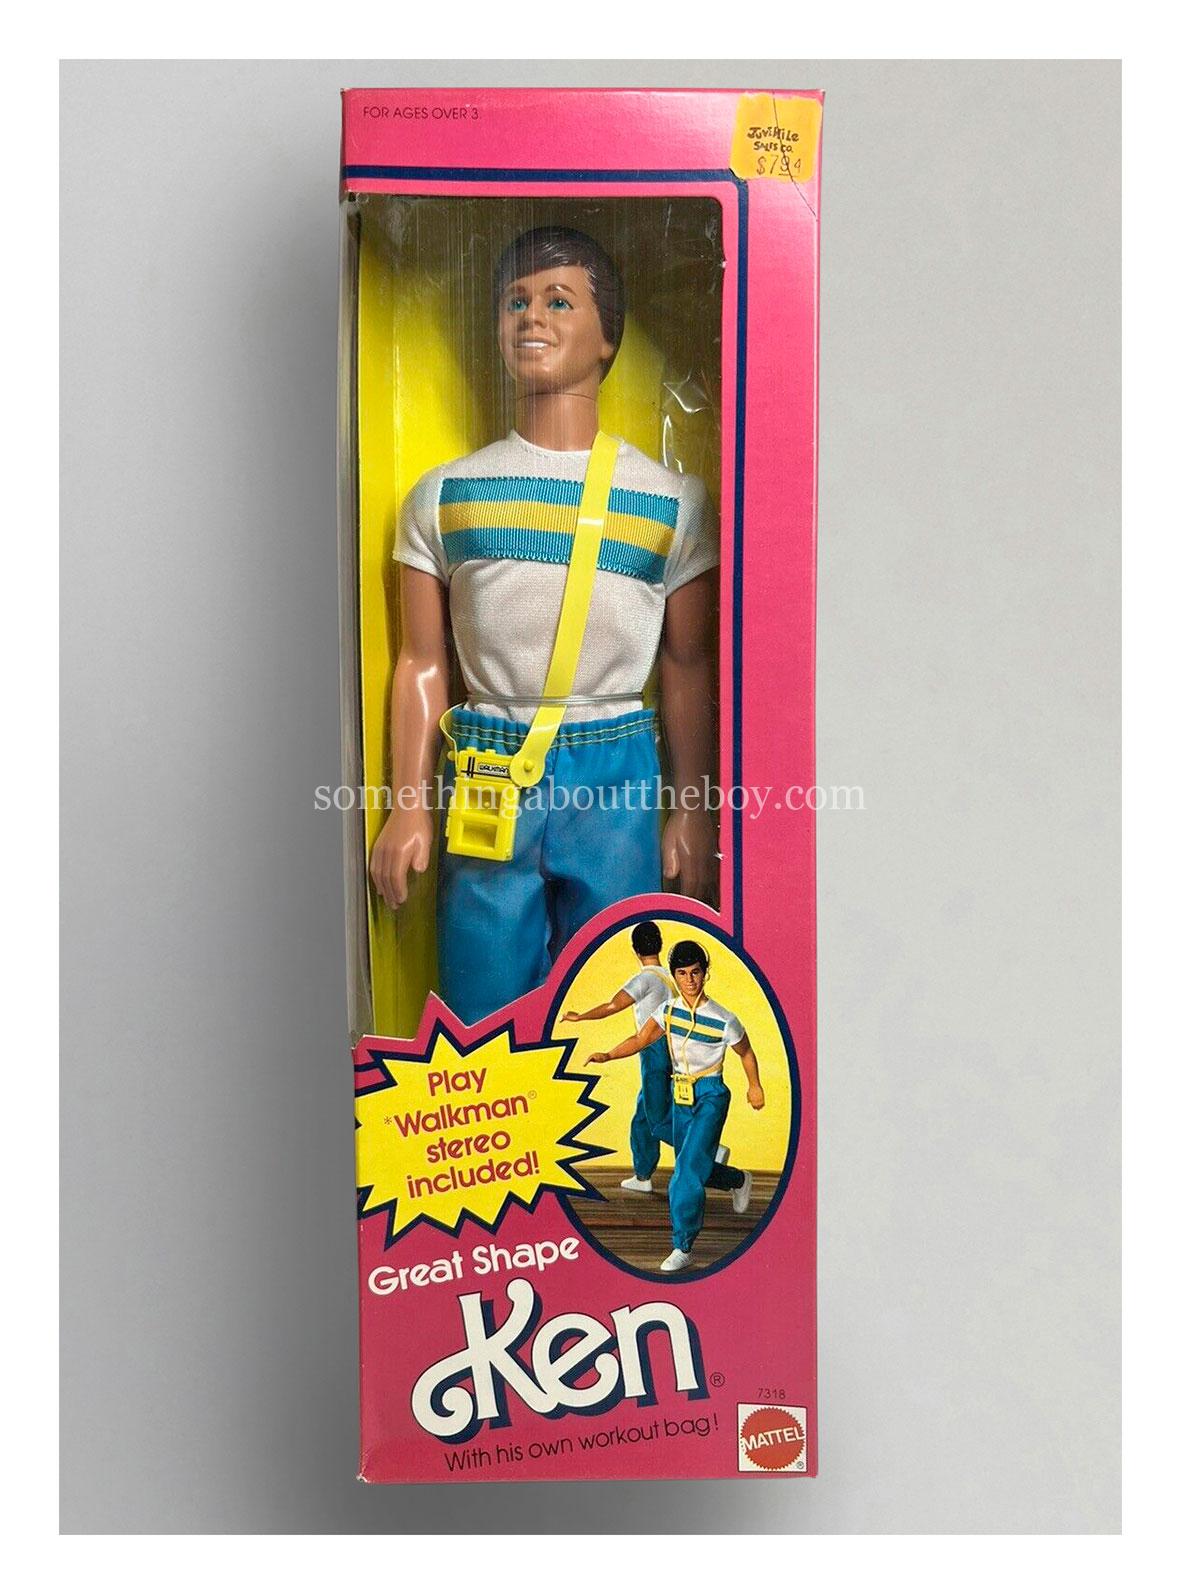 1986 #7318 Great Shape Ken in original packaging